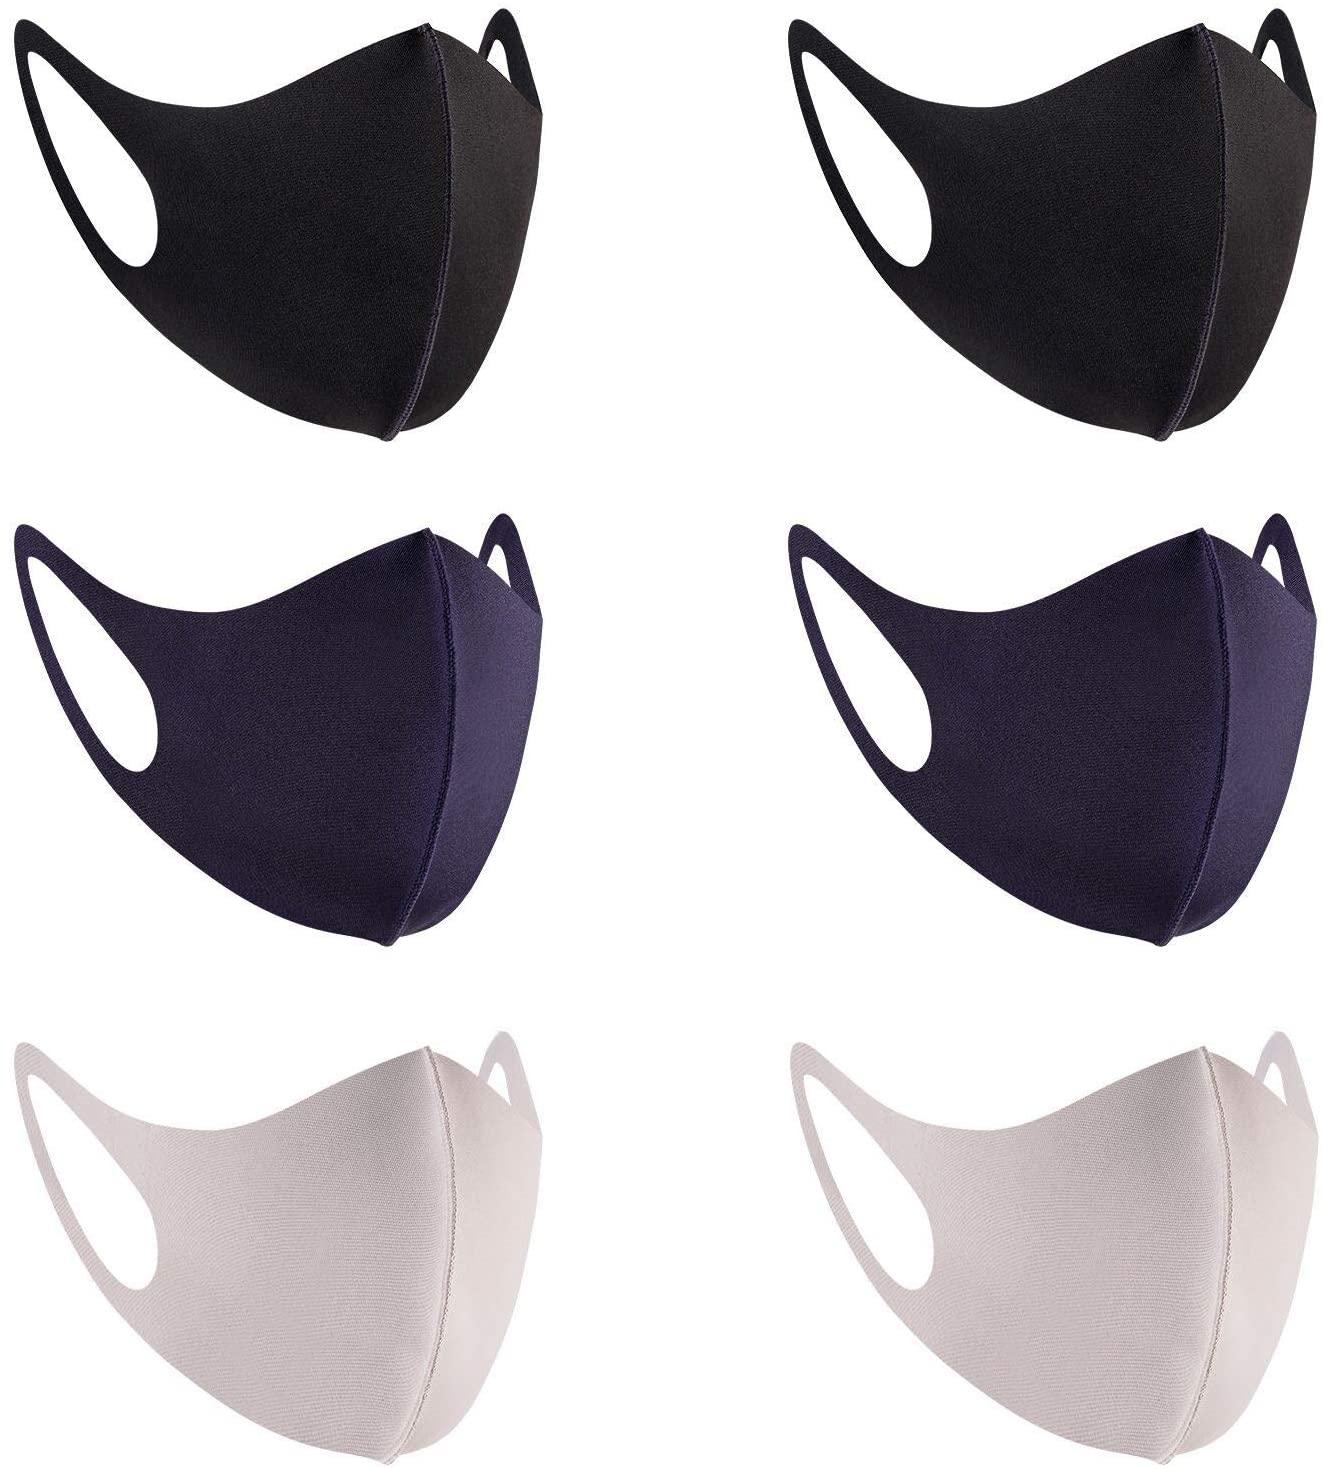 6 Pcs Fashion Cloth Fabric Face Protection, Unisex Earloop 6 Colors Washable, Reusable